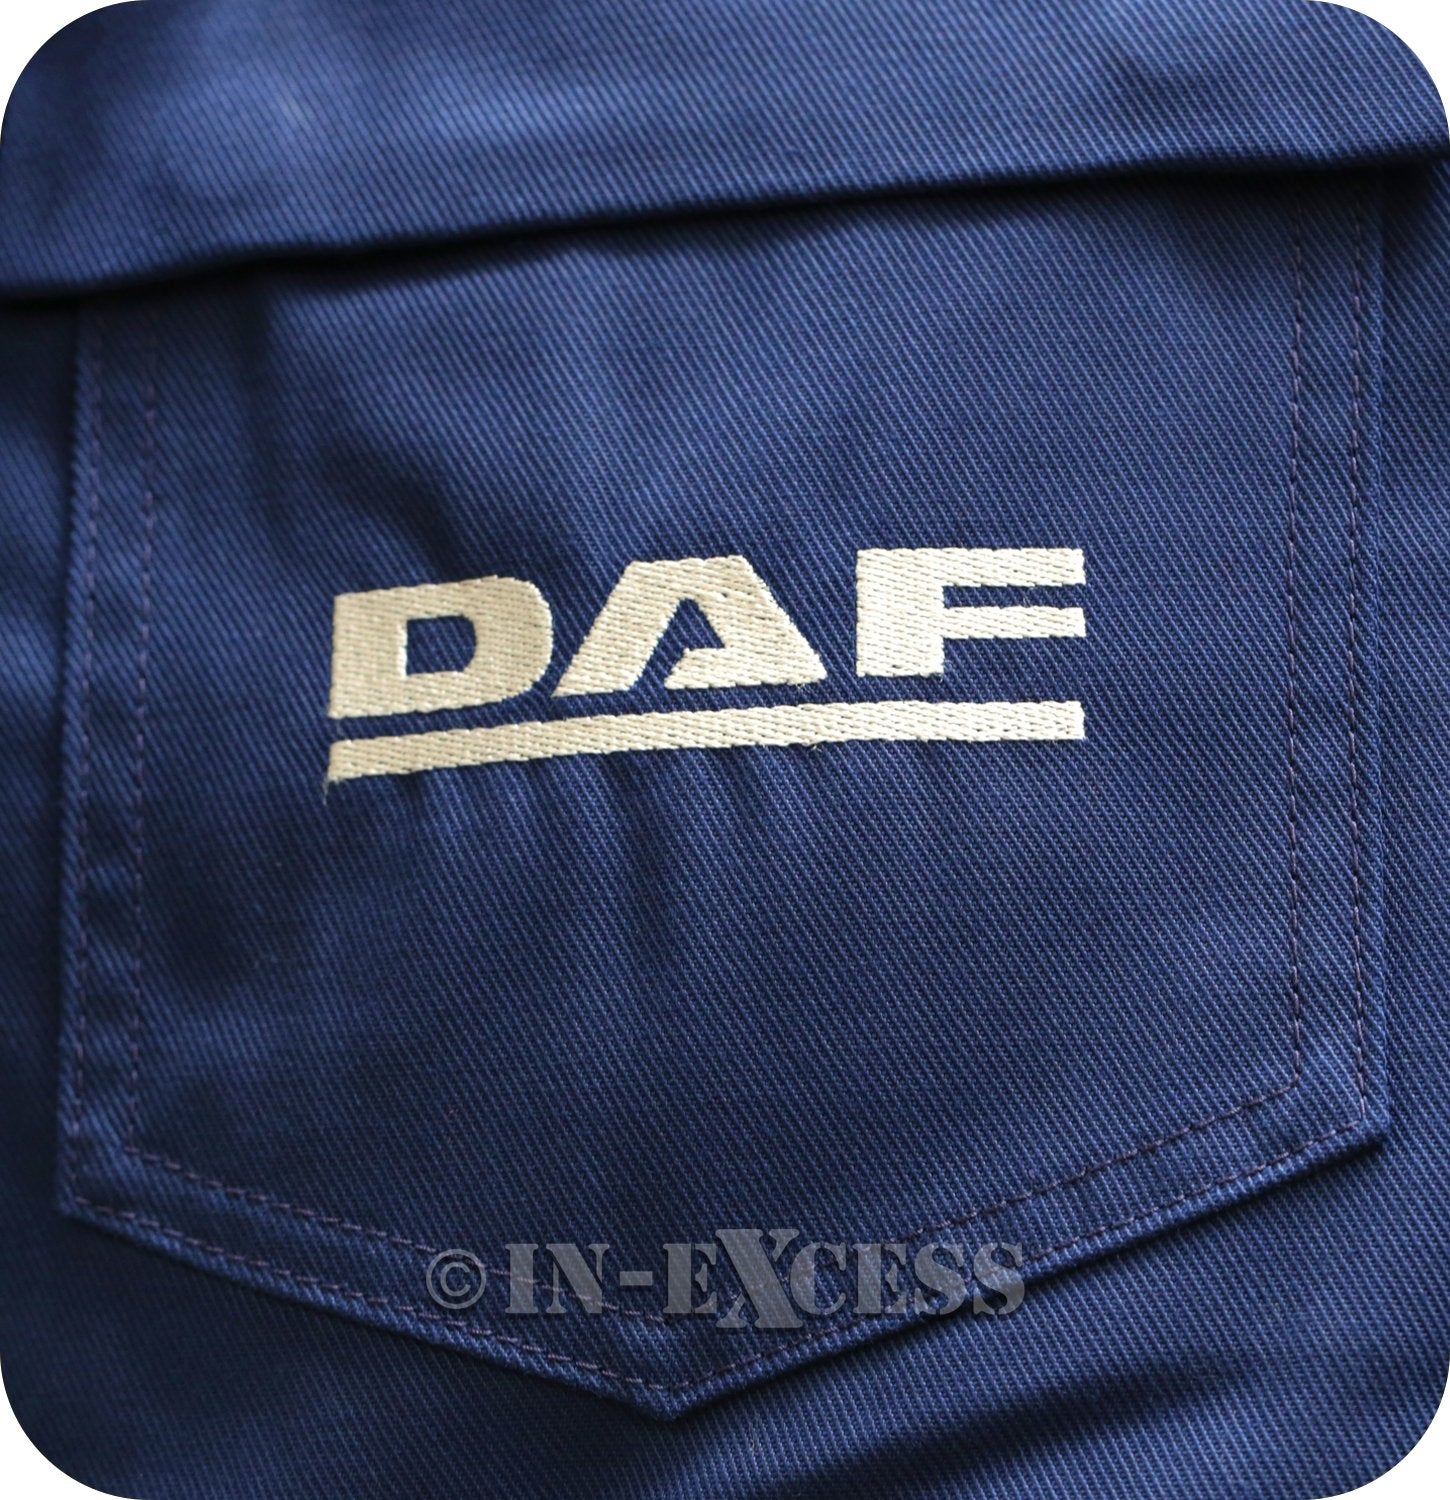 DAF Heavy Duty Mechanics Boiler Work Wear Overalls - Navy Blue